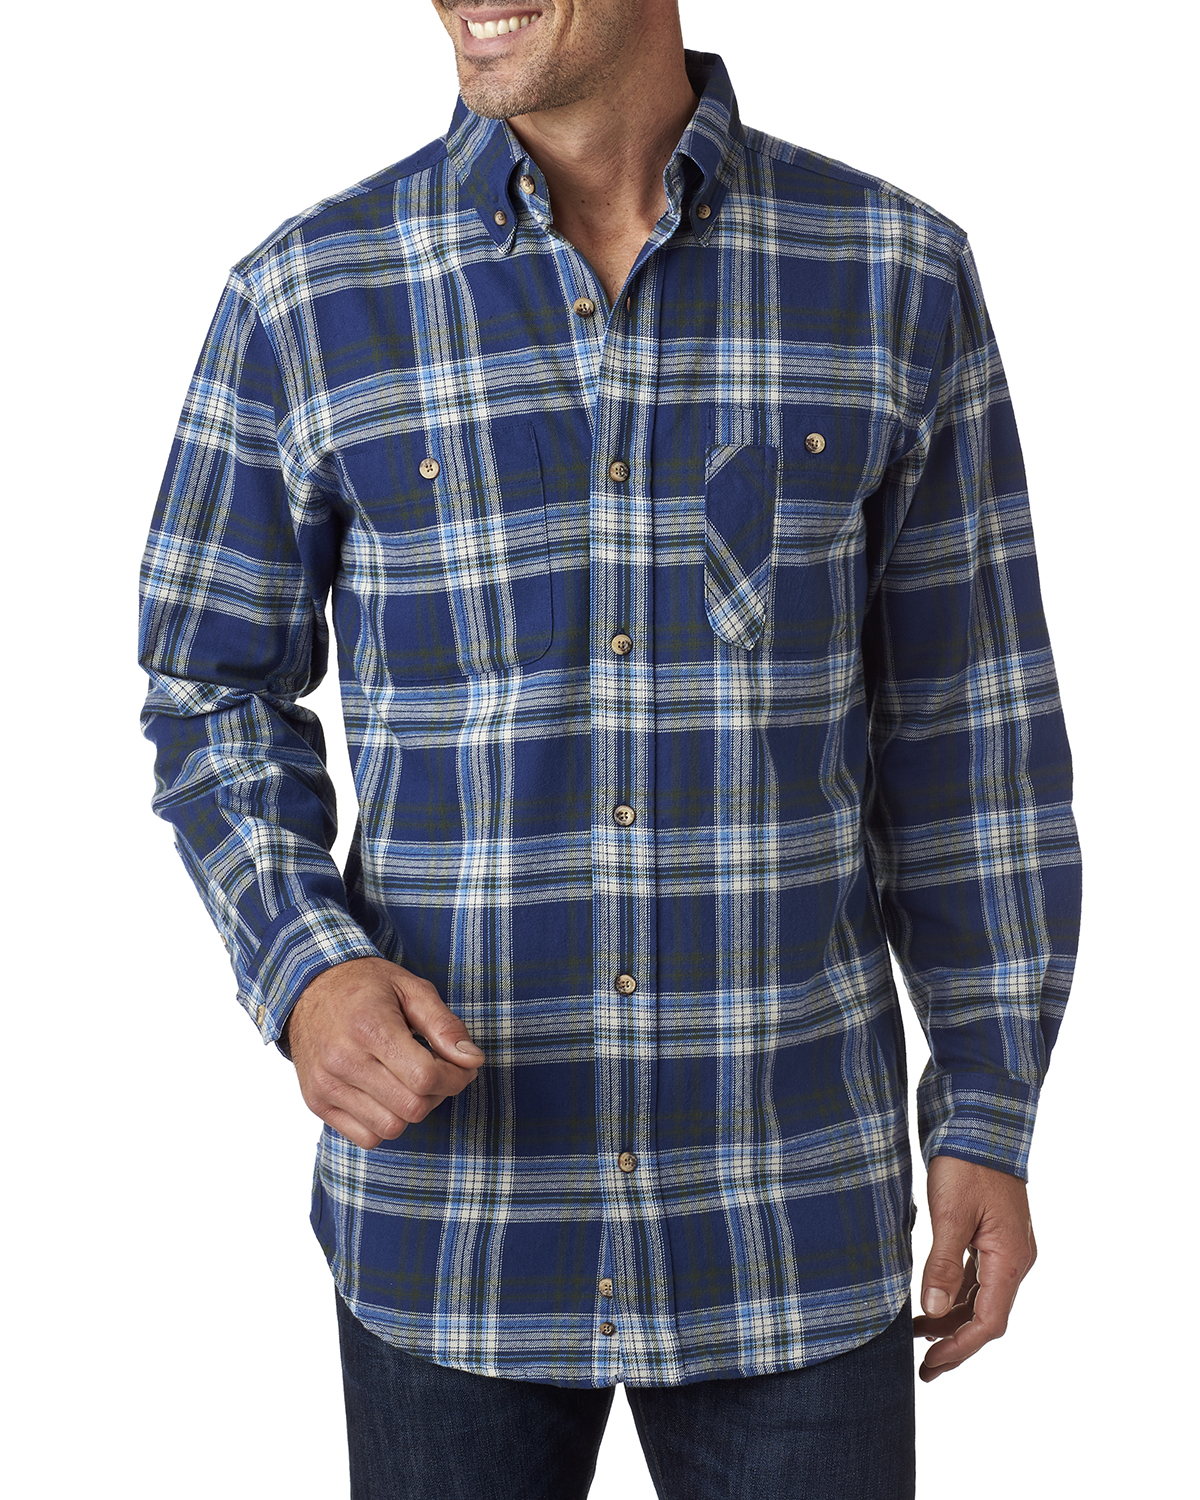 Backpacker BP7001 - Men's Yarn-Dyed Flannel Shirt